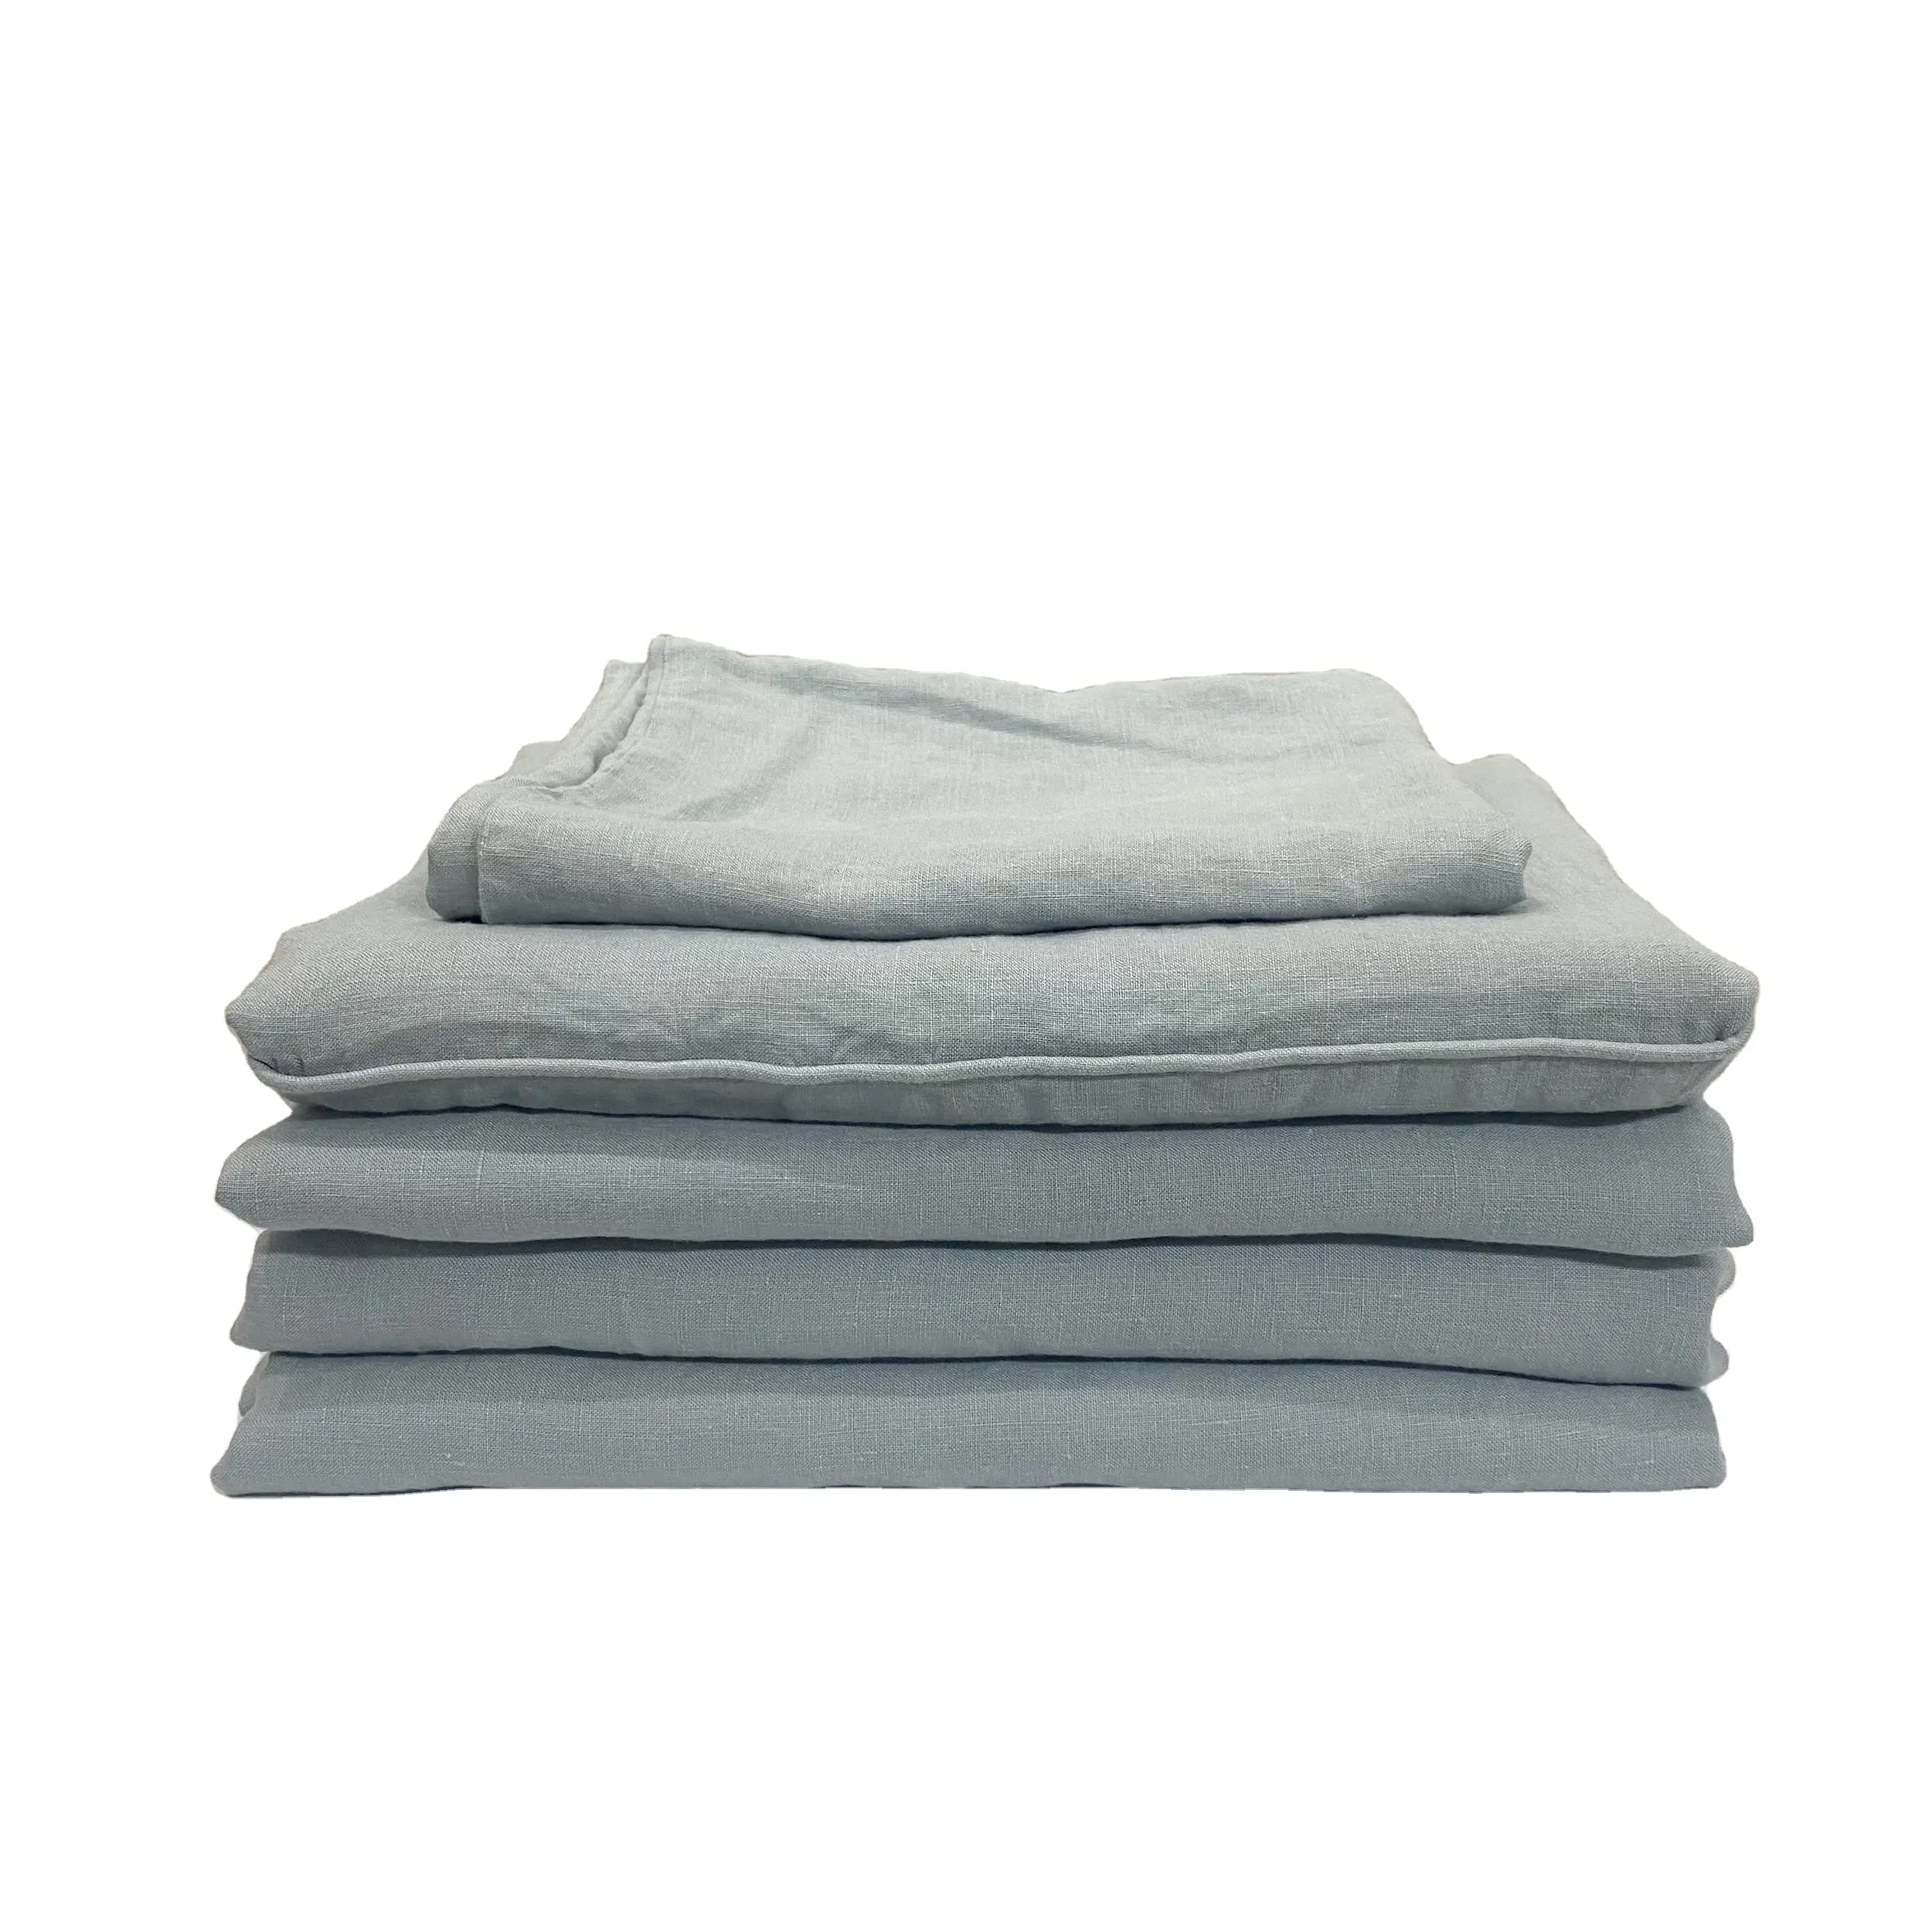 Conjunto de roupas de cama vintage 100%, conjunto de roupa de cama francesa de linho lavado, cobertura de duvet, capa de colcha